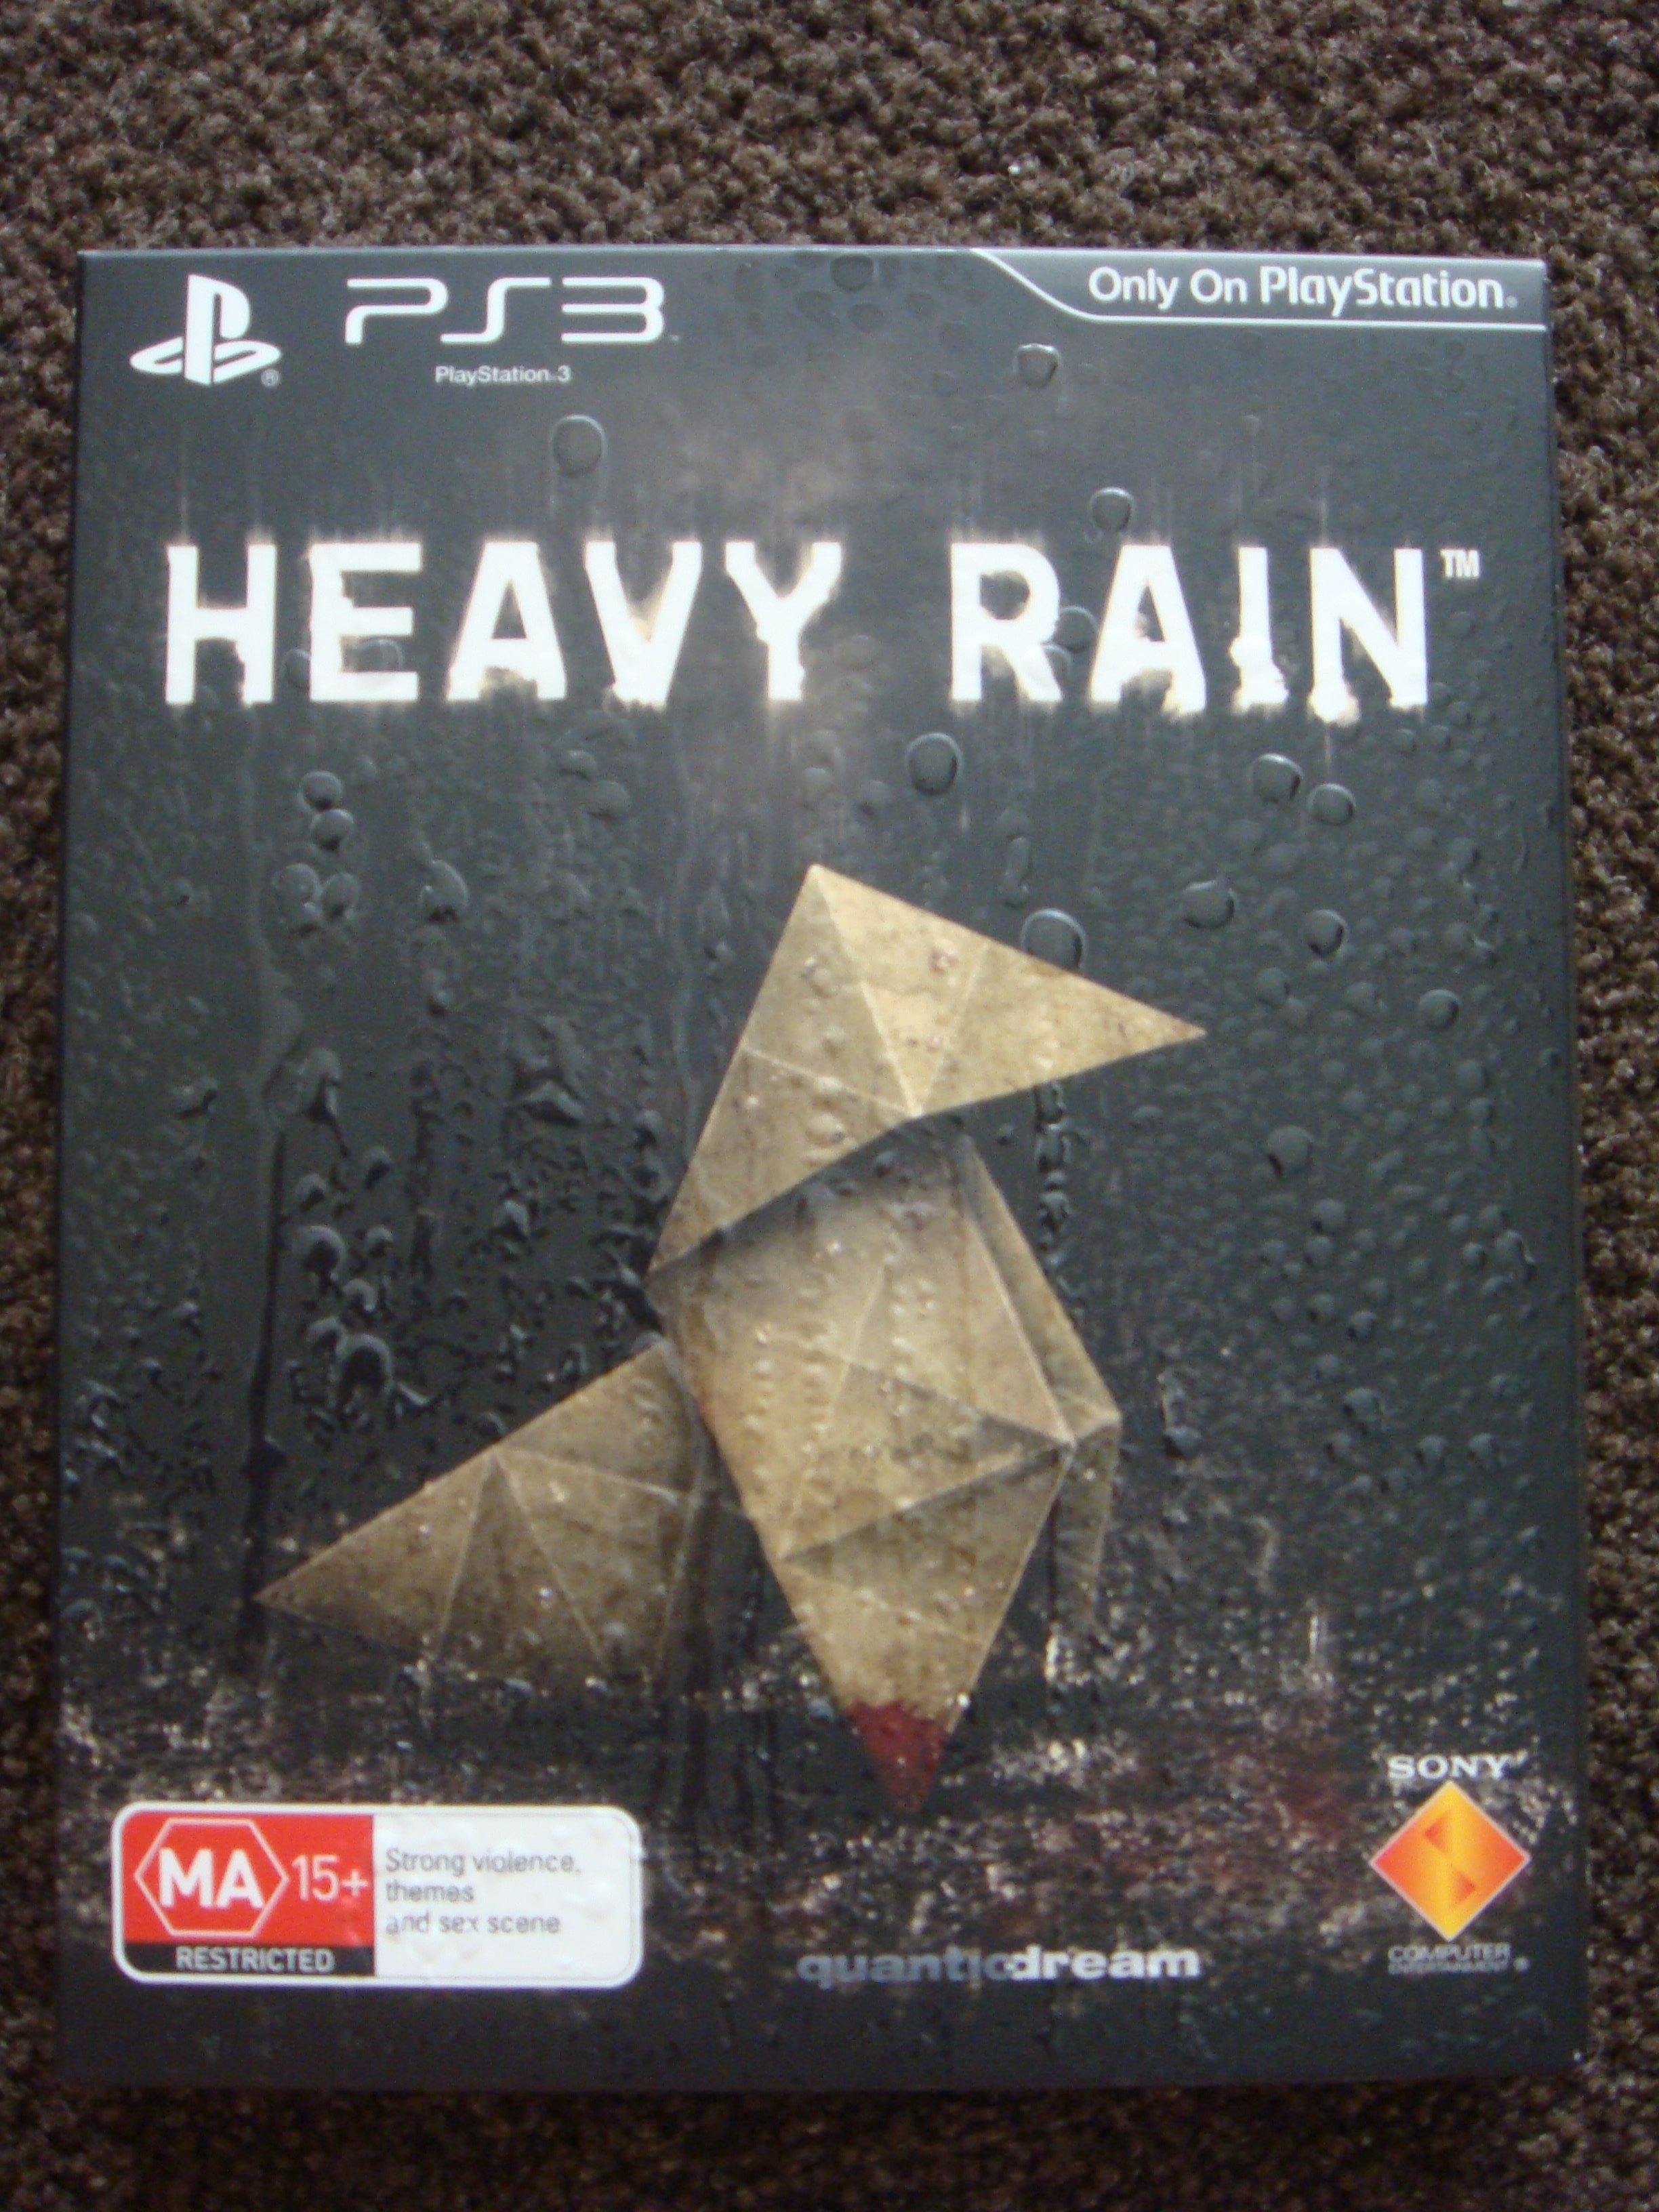 heavy_rain_limited_edition_front.jpg